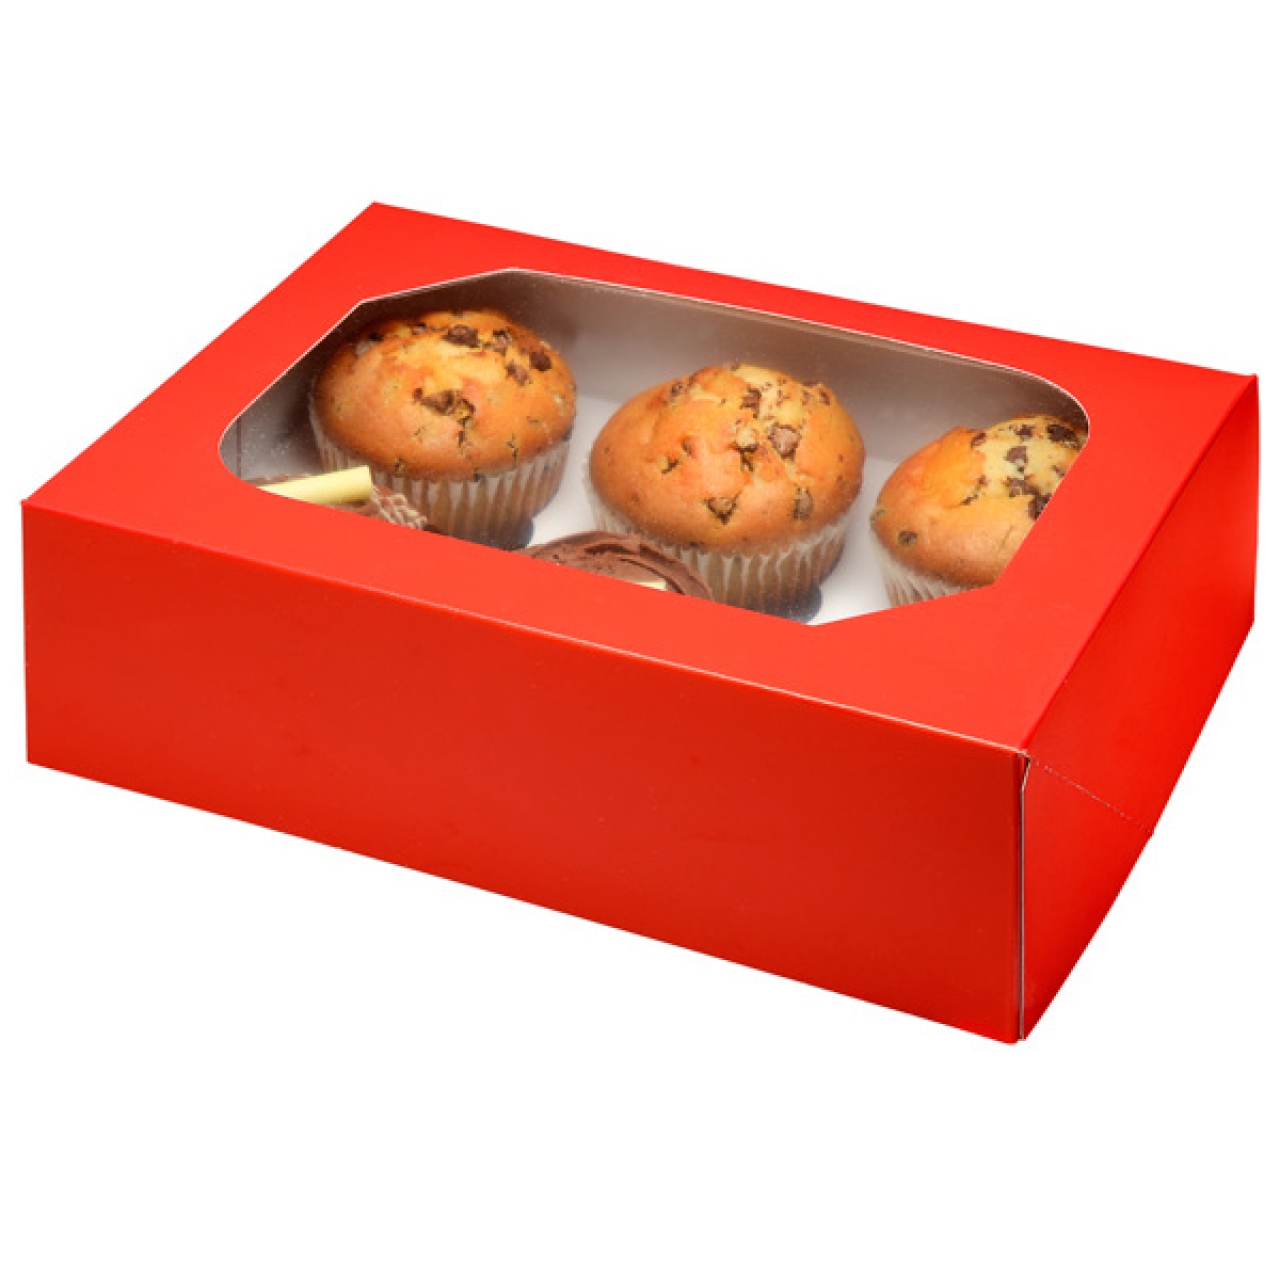 Cupcake Box für 6 cupcakes in Rot